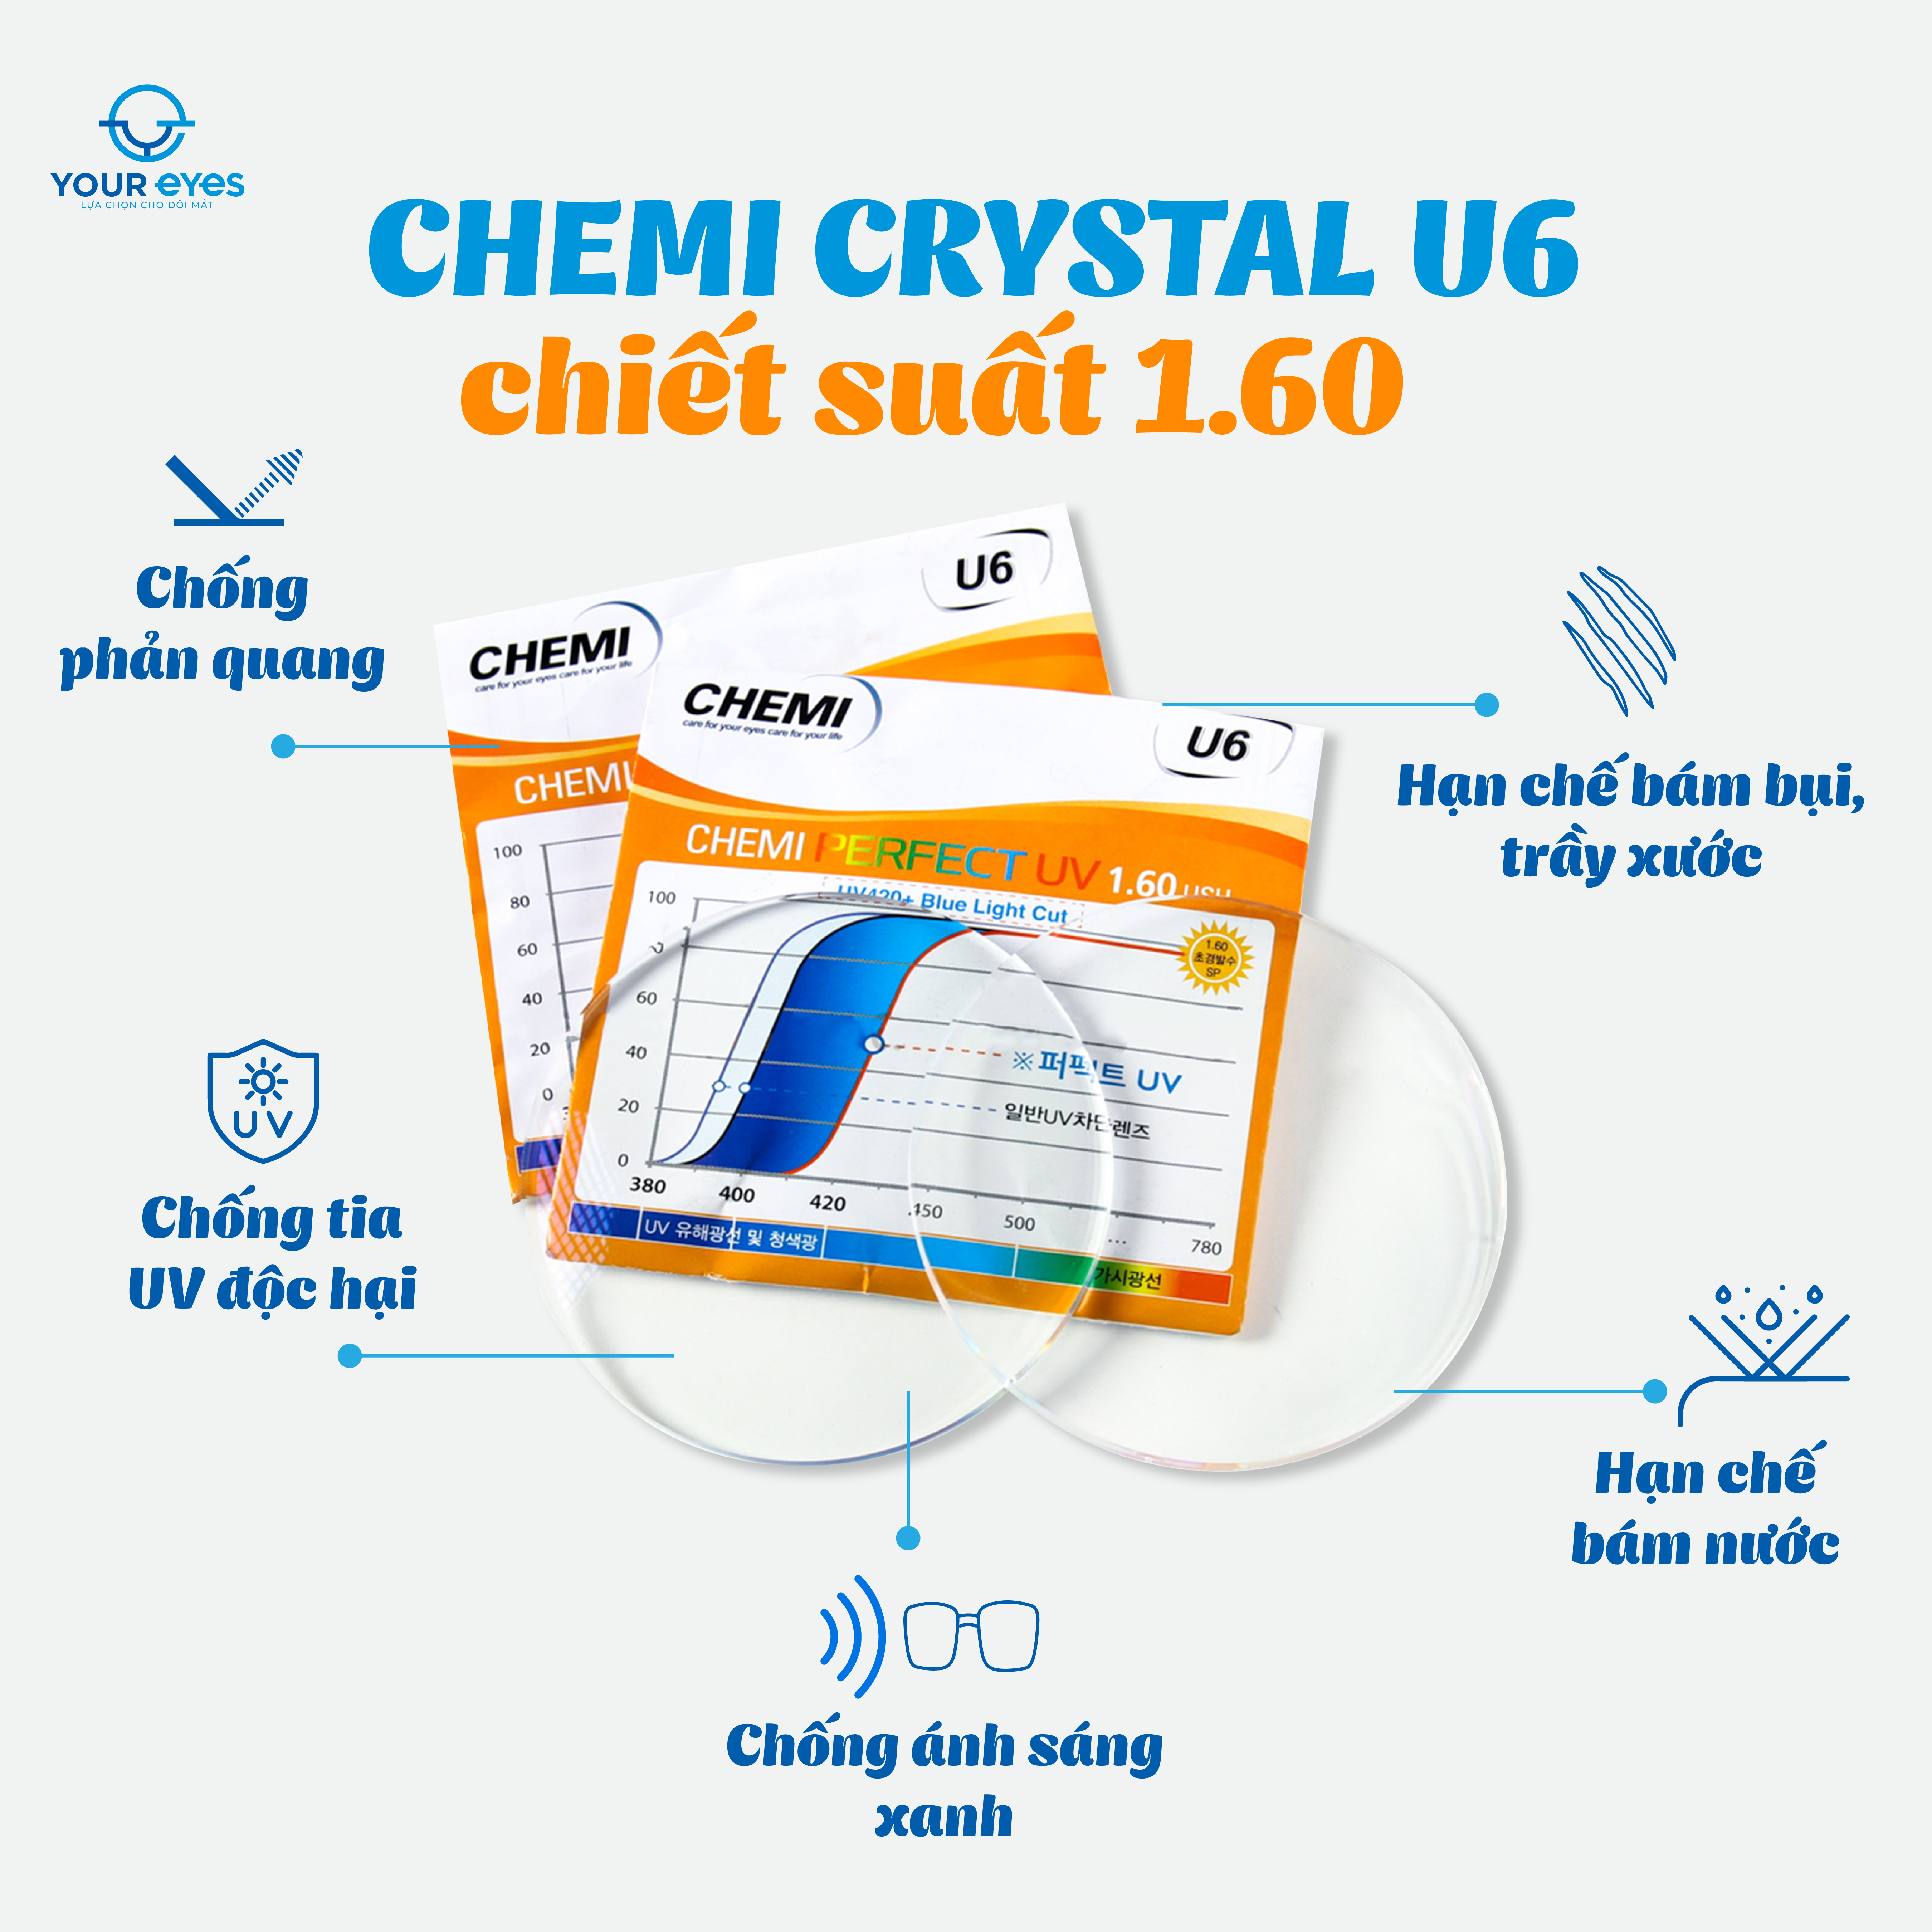 Trong-kinh-Chemi-U6-Chiet-suat-1.60